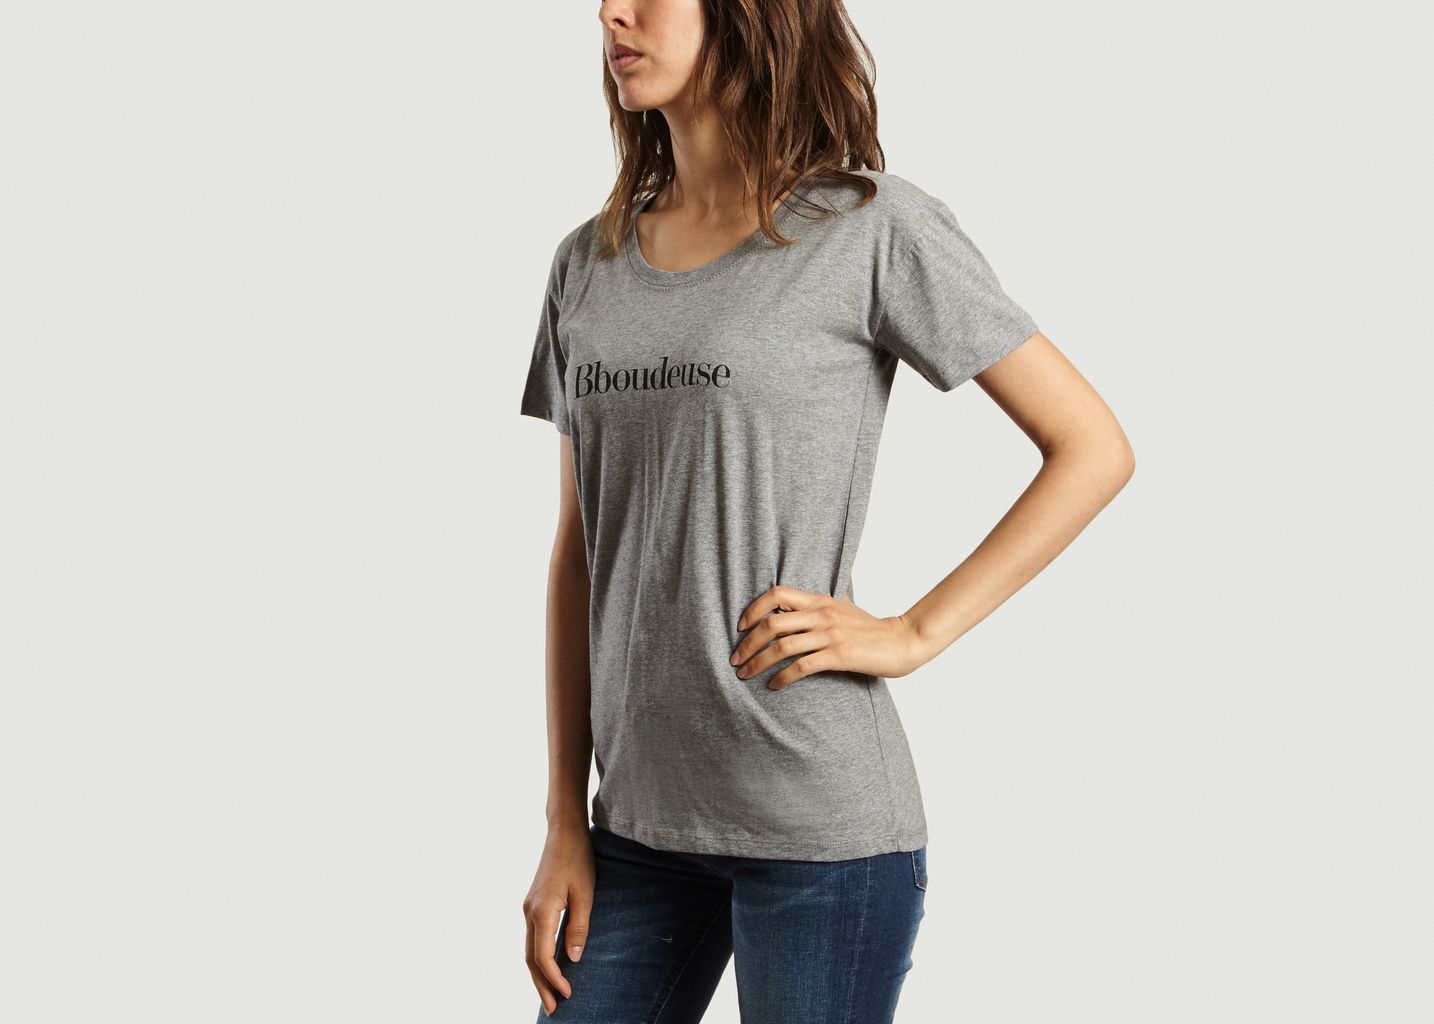 Boudeuse T-shirt - Vanessa Bruno